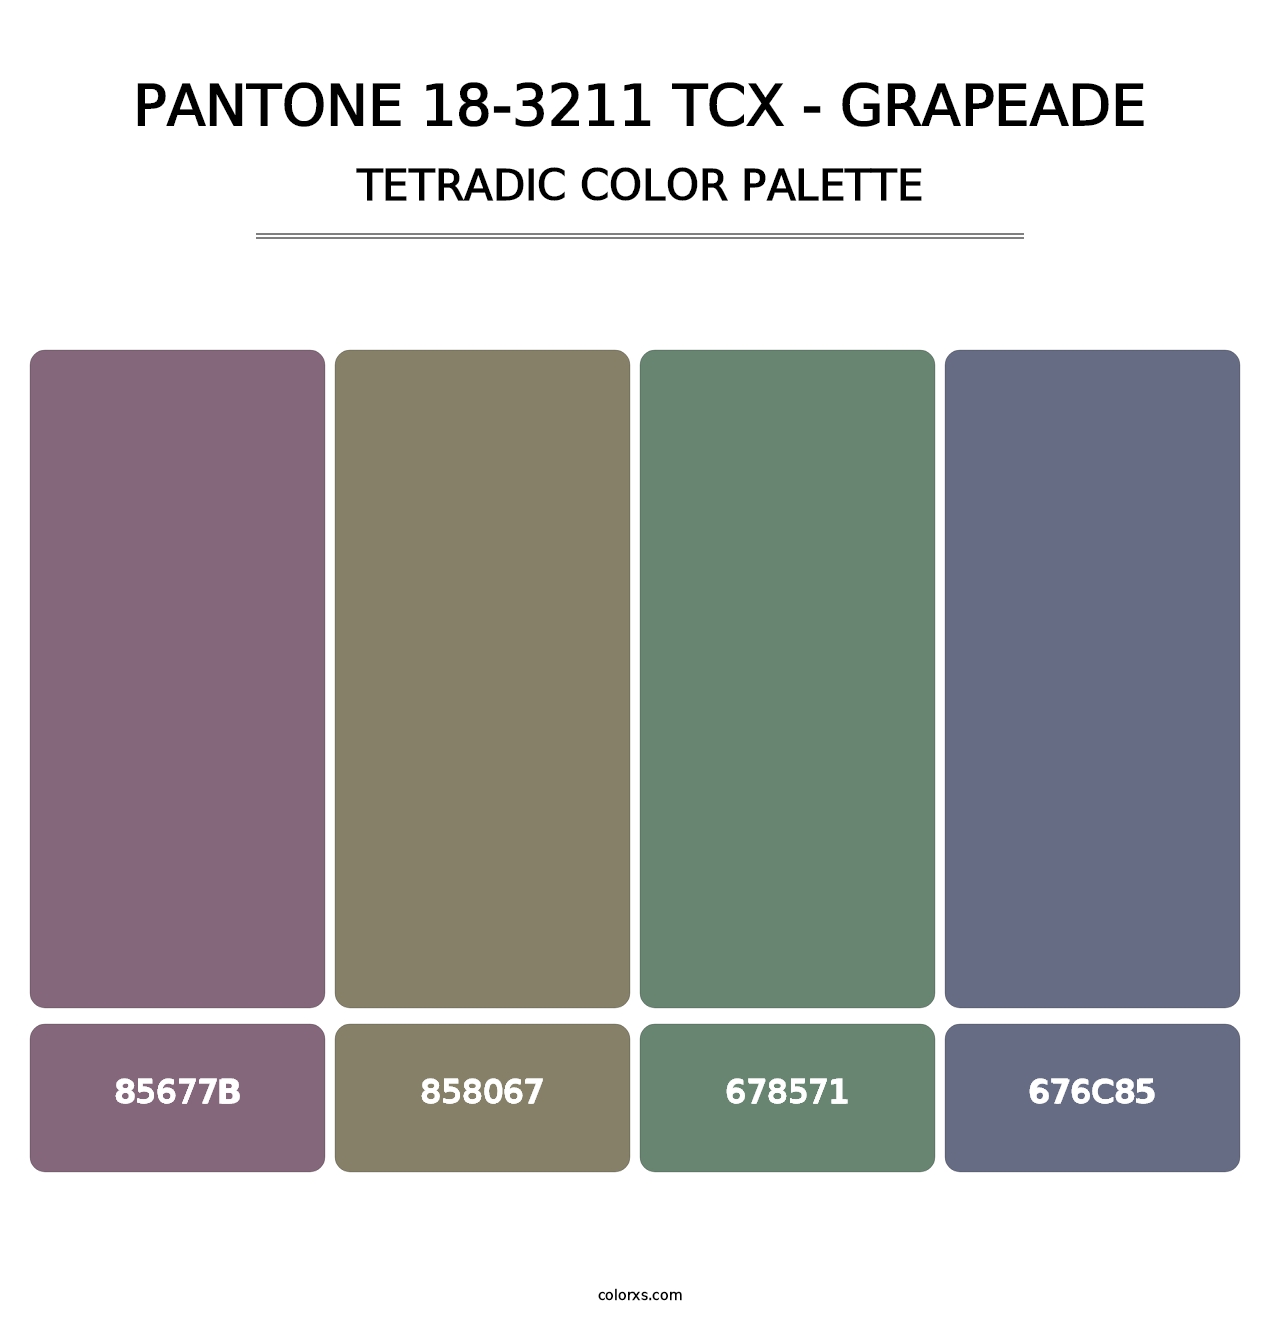 PANTONE 18-3211 TCX - Grapeade - Tetradic Color Palette